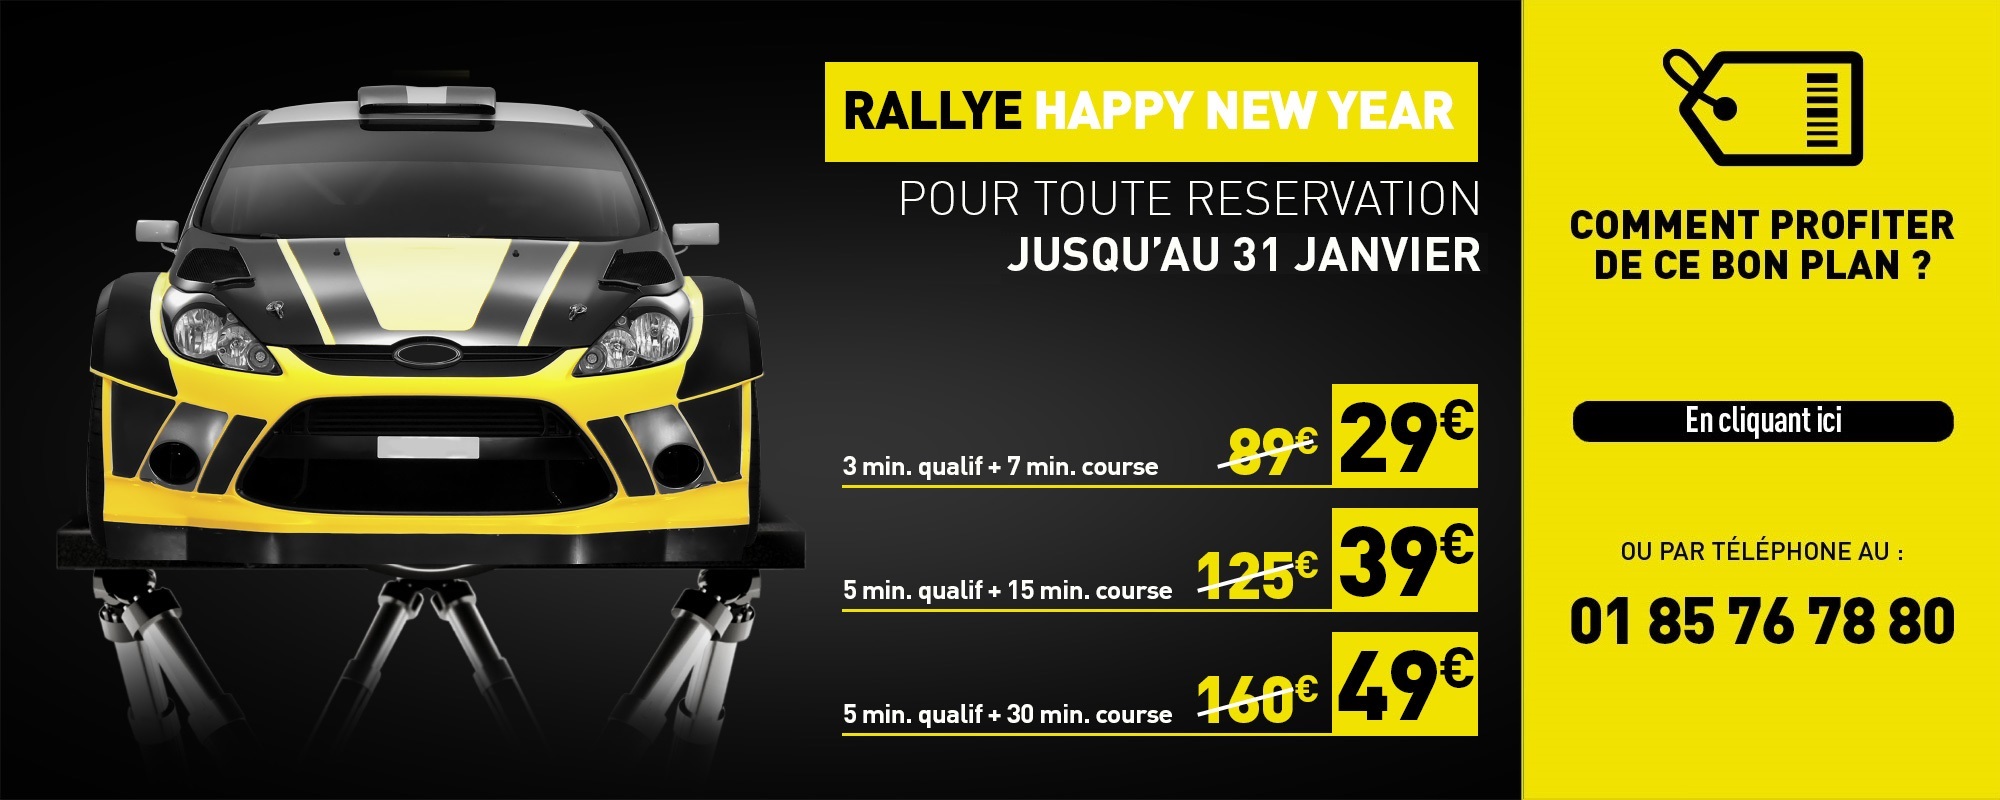 Rallye Happy New Year